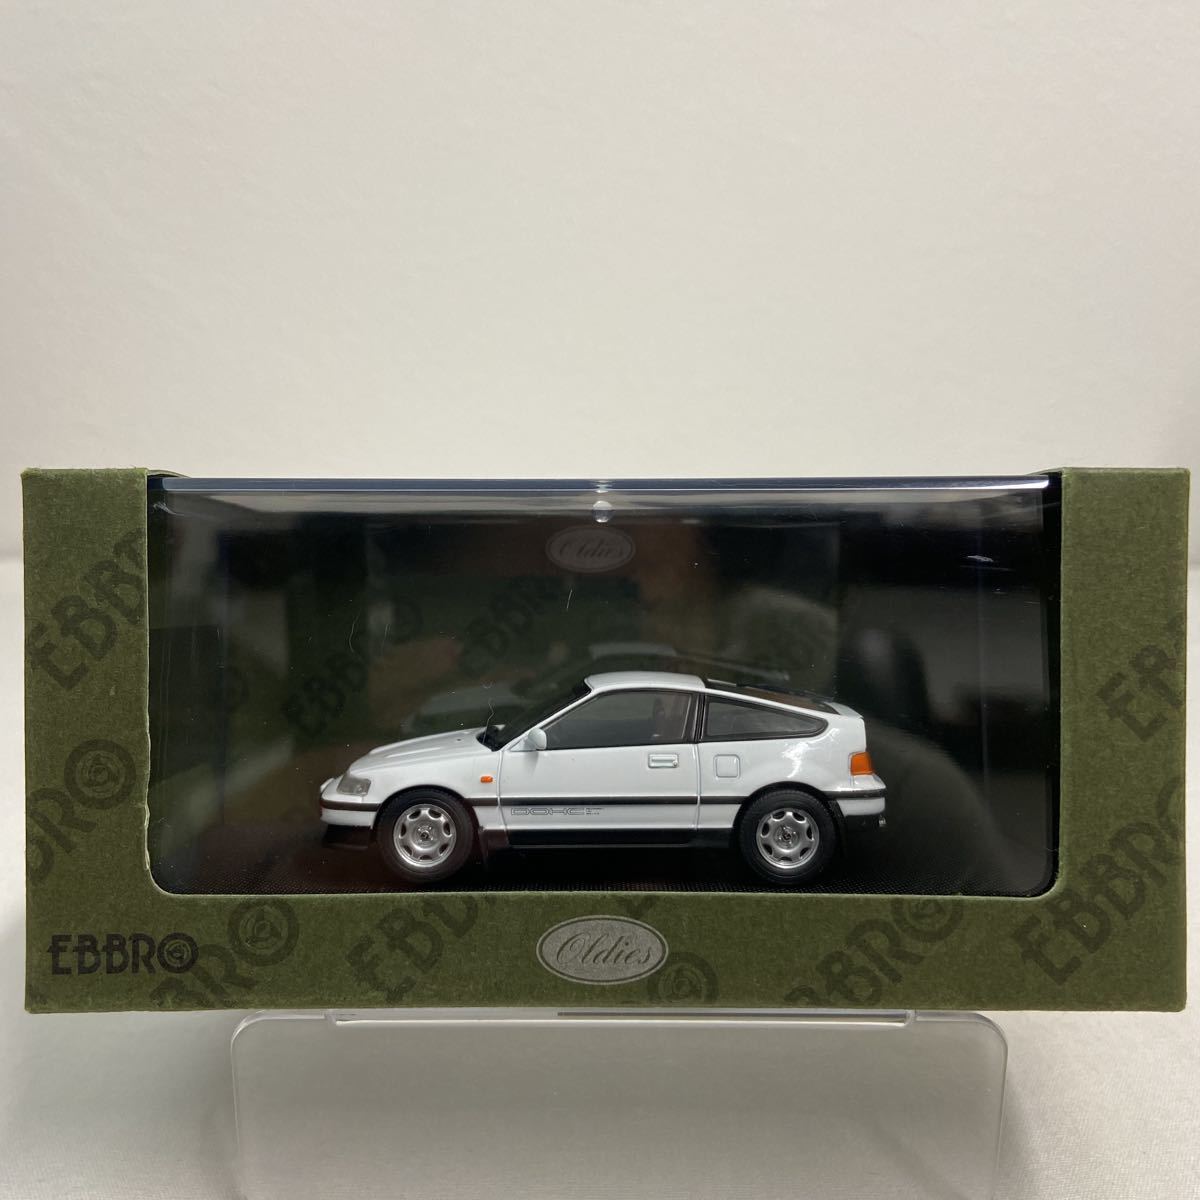 EBBRO 1/43 HONDA CR-X 1987年 WHITE エブロ ホンダ ホワイト JDM 国産 旧車 名車 絶版 ミニカー モデルカー